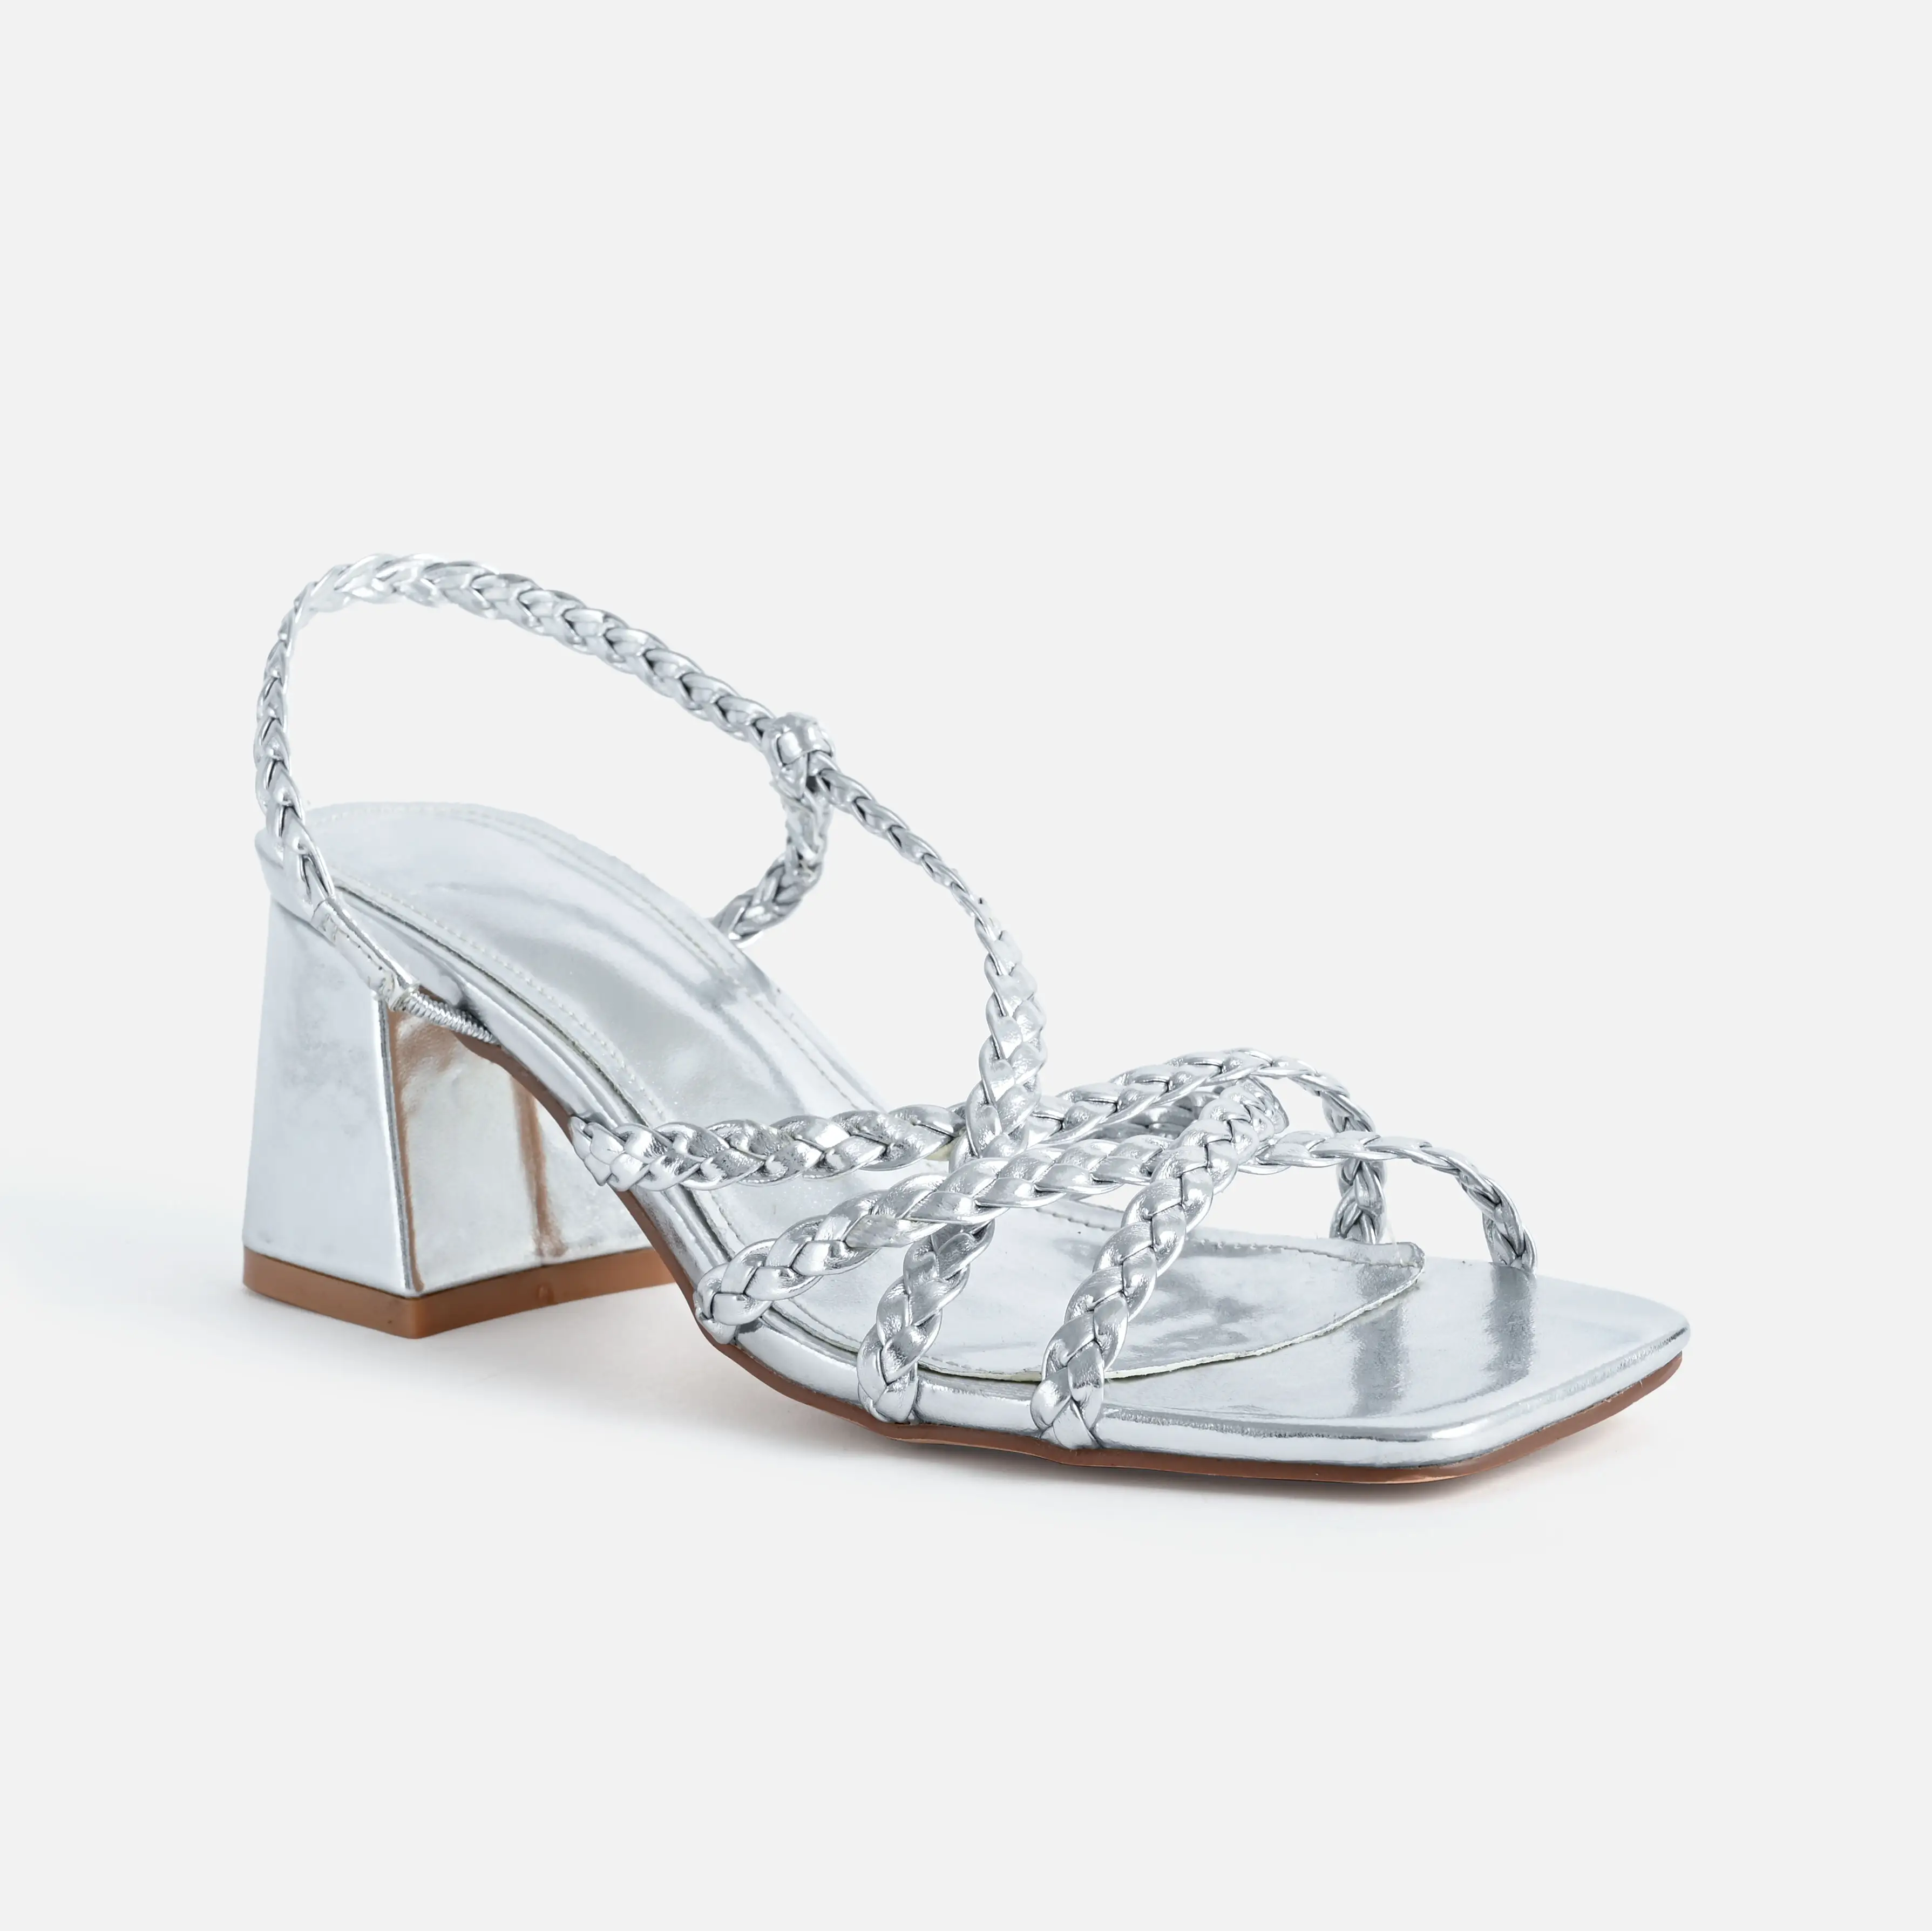 Nuovi sandali in argento a strisce intrecciate da donna sexy eleganti a punta quadrata spessa e spessa